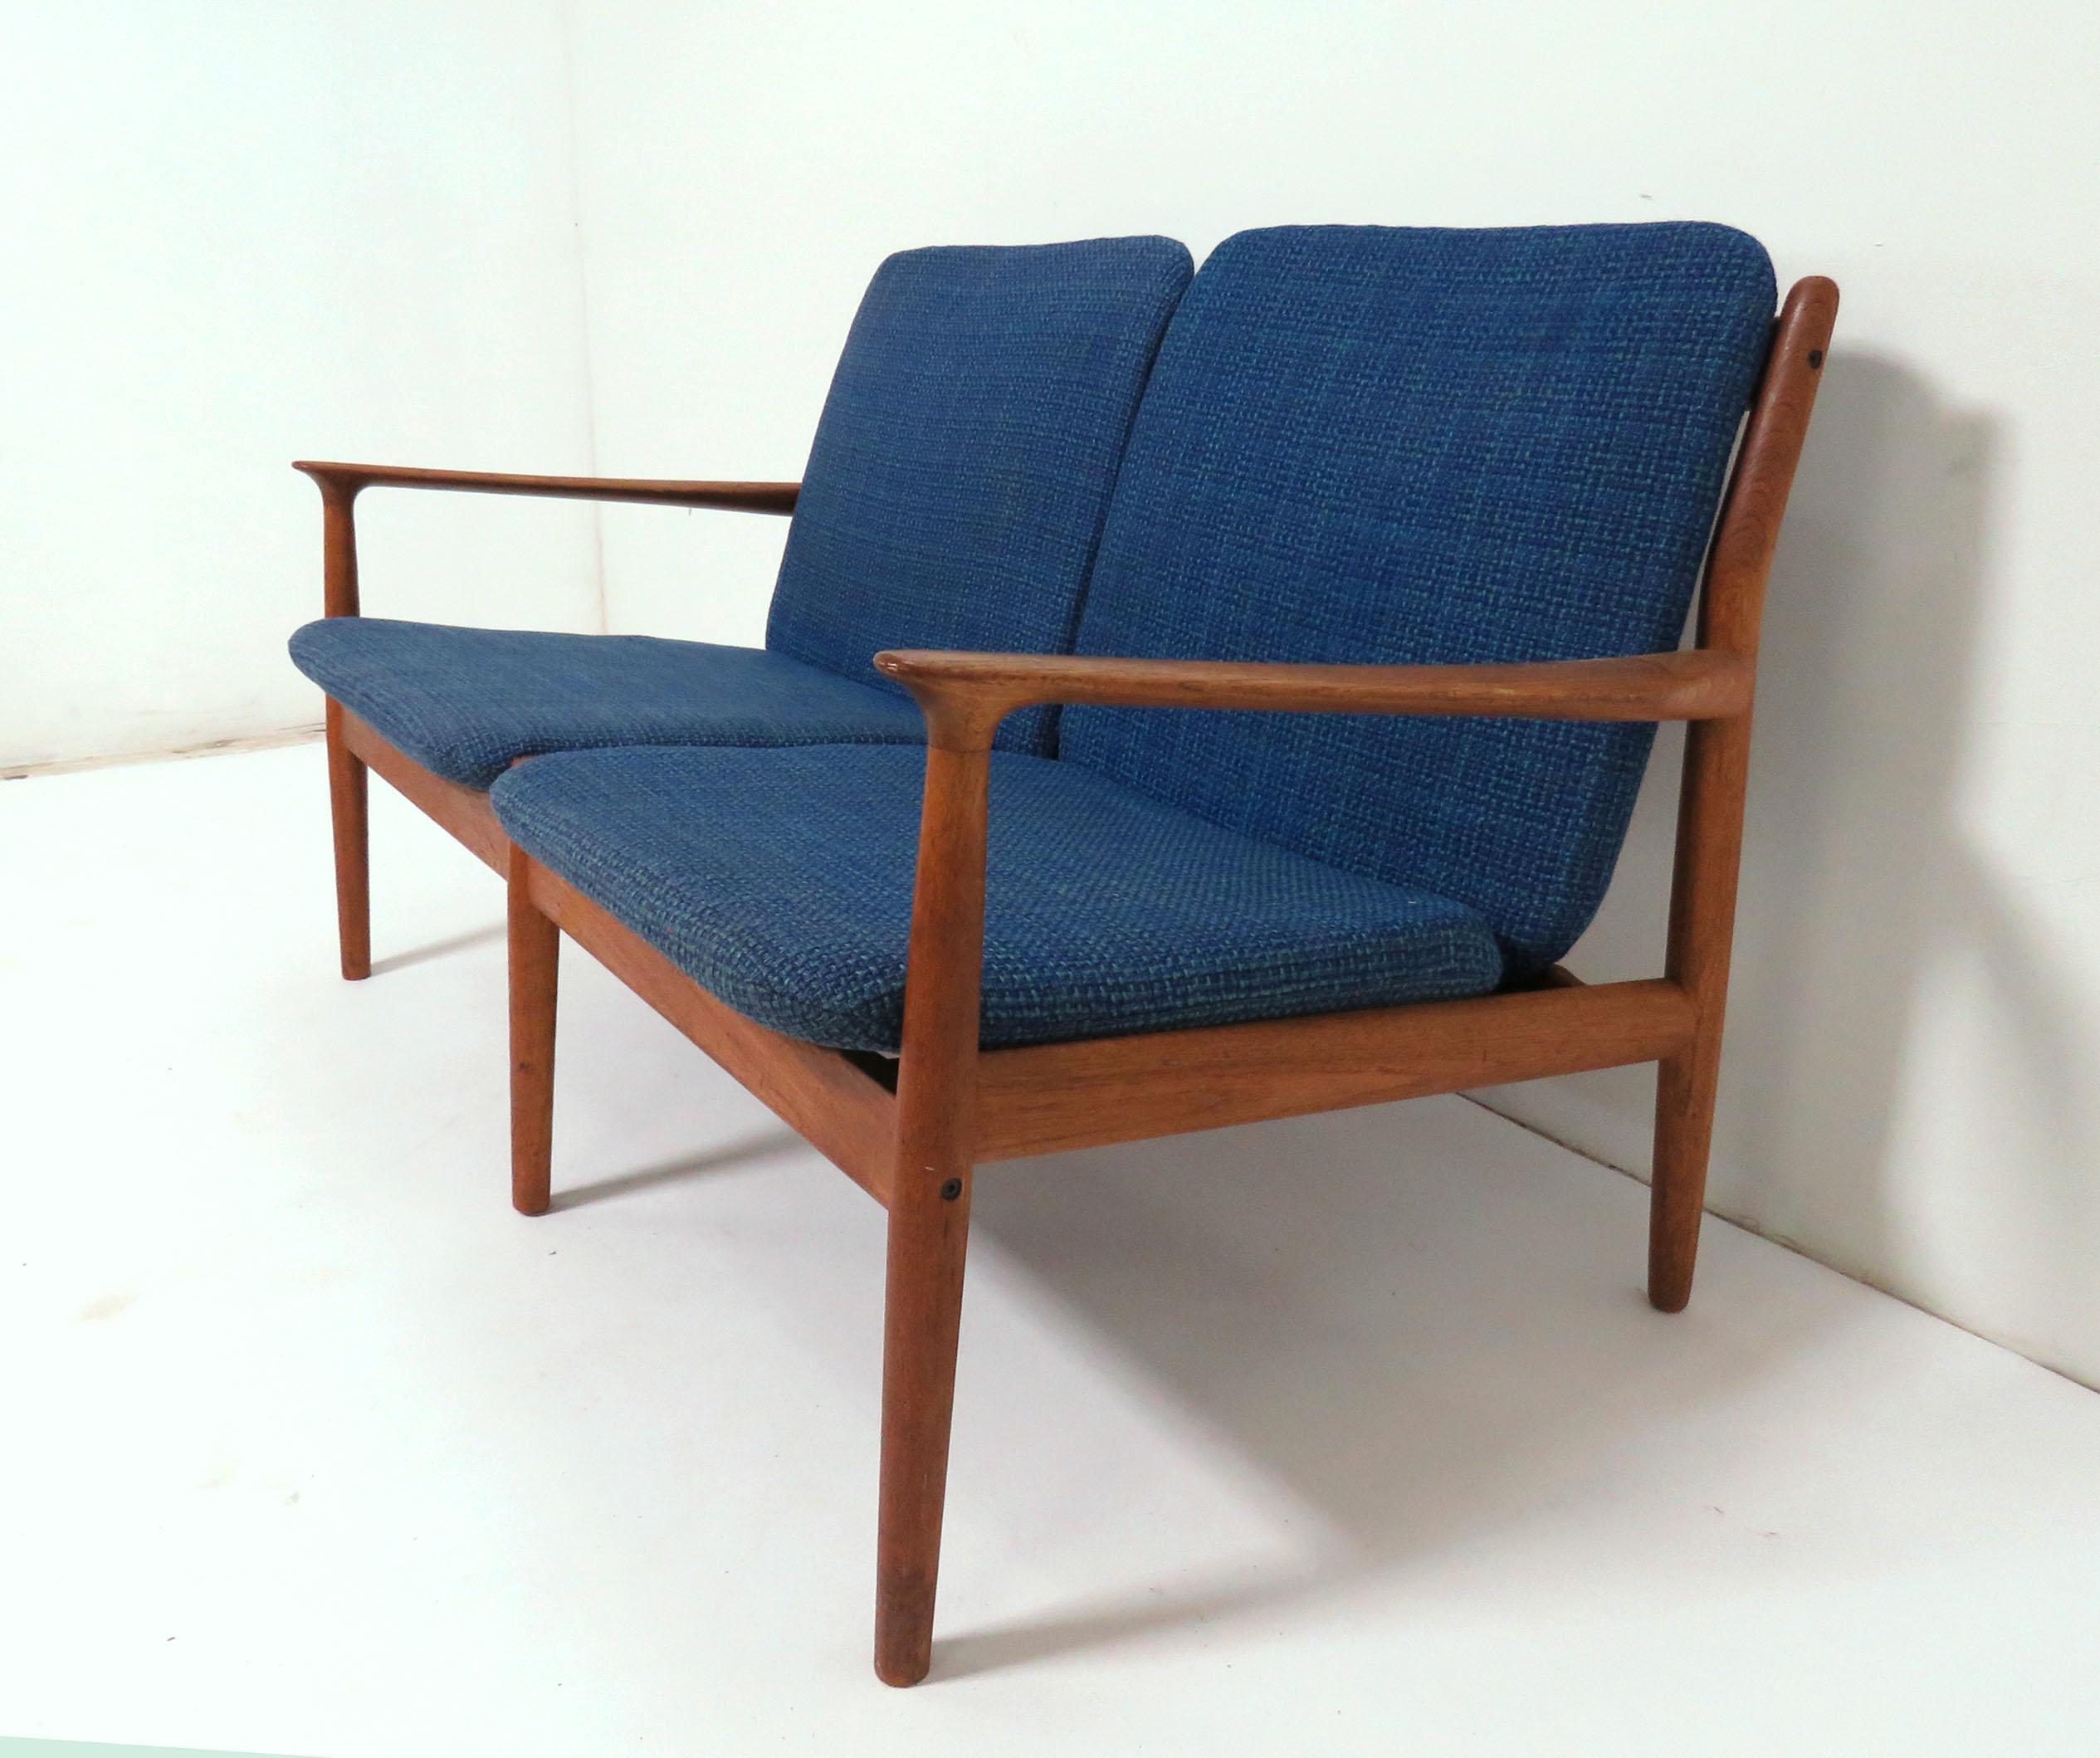 Teak loveseat / two-seat sofa by Arne Vodder for Glostrup, circa 1960s.